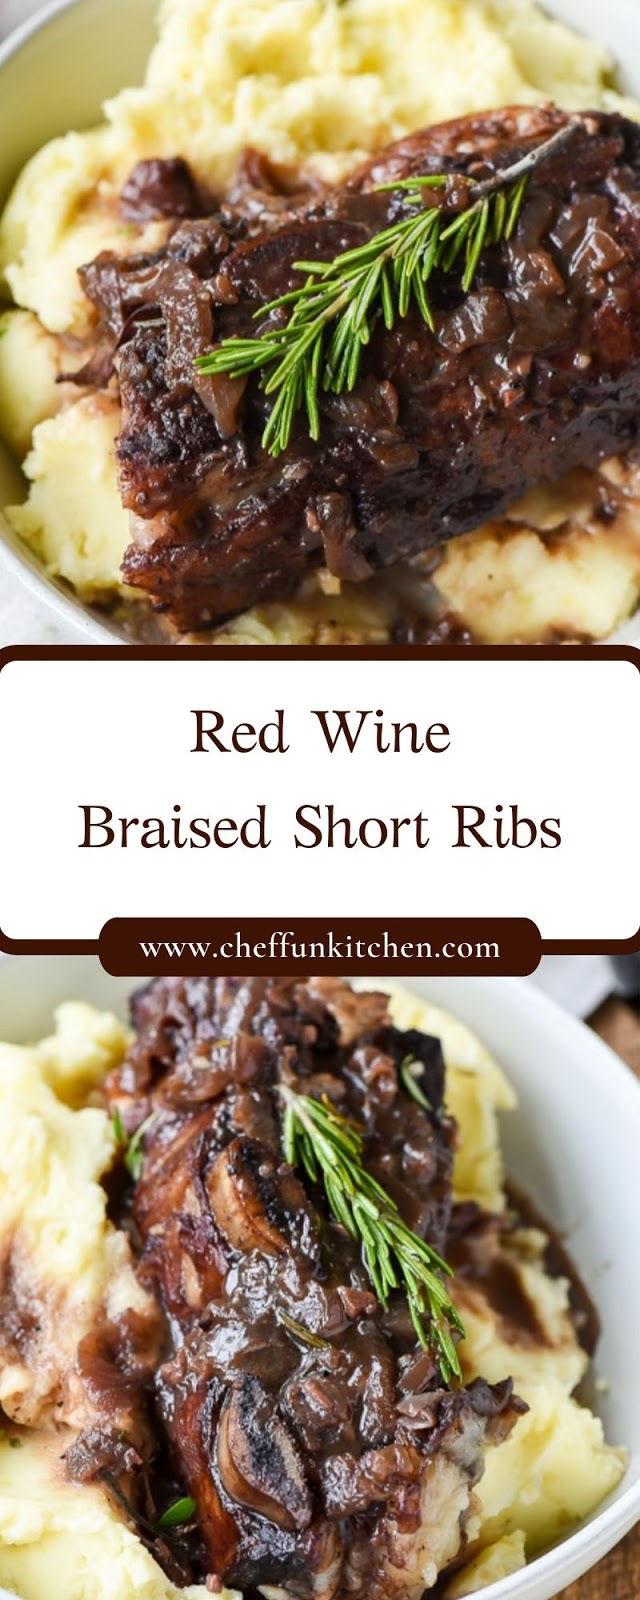 Red Wine Braised Short Ribs